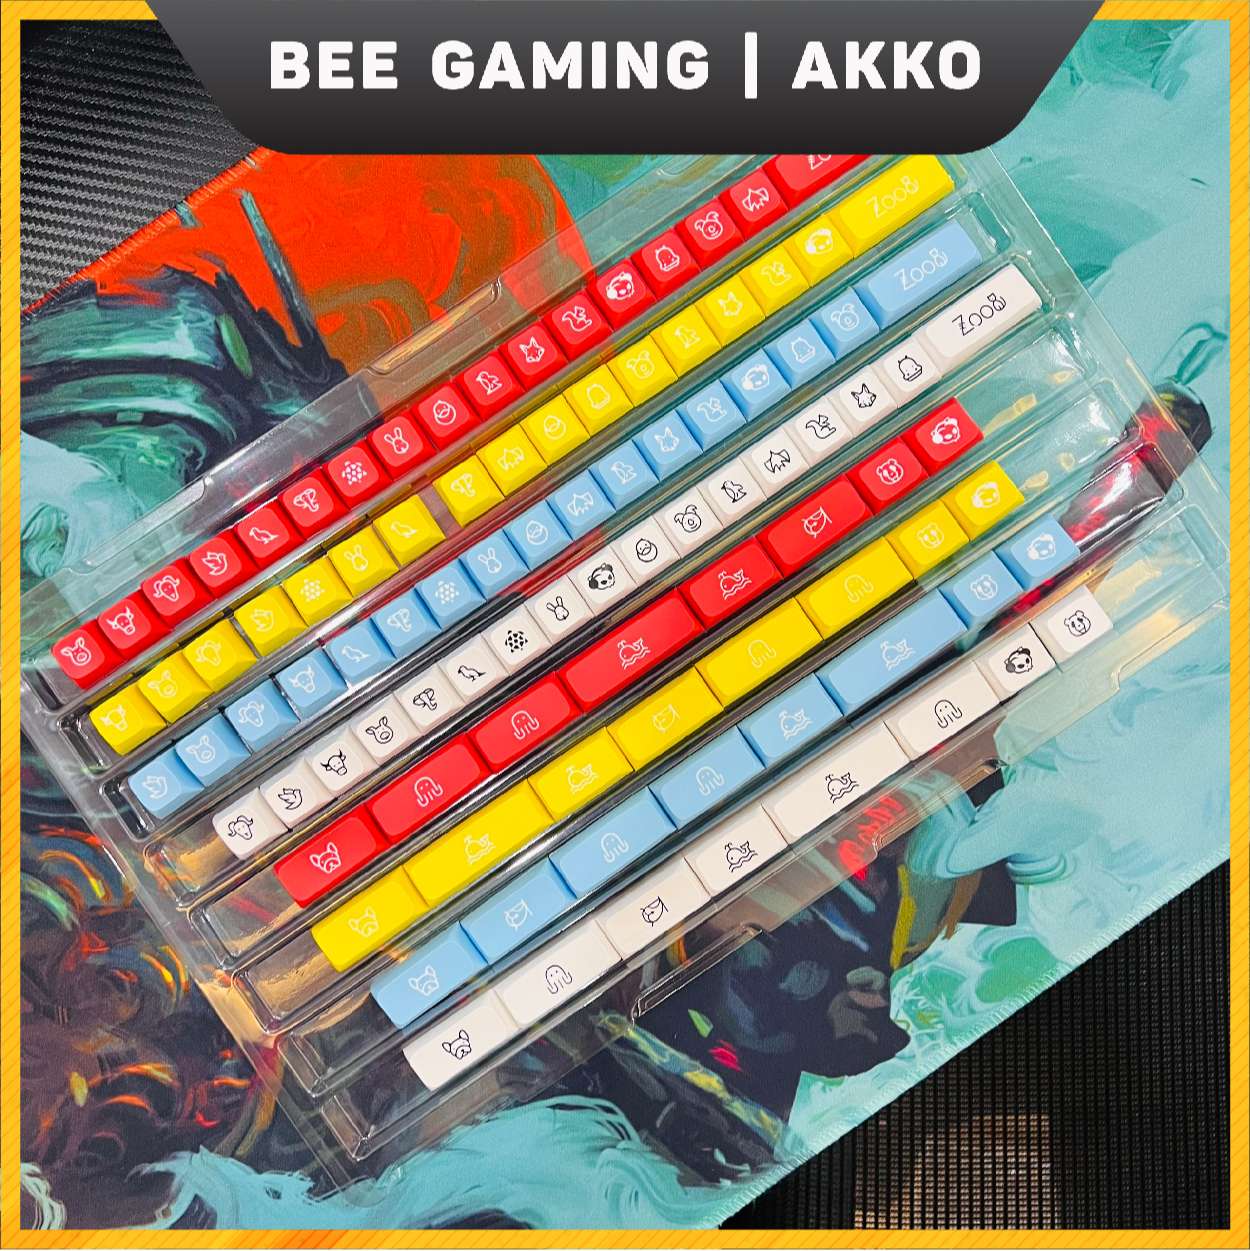 bo-keycap-akko-set-wob-mda-profile-282-nut-beegaming-4